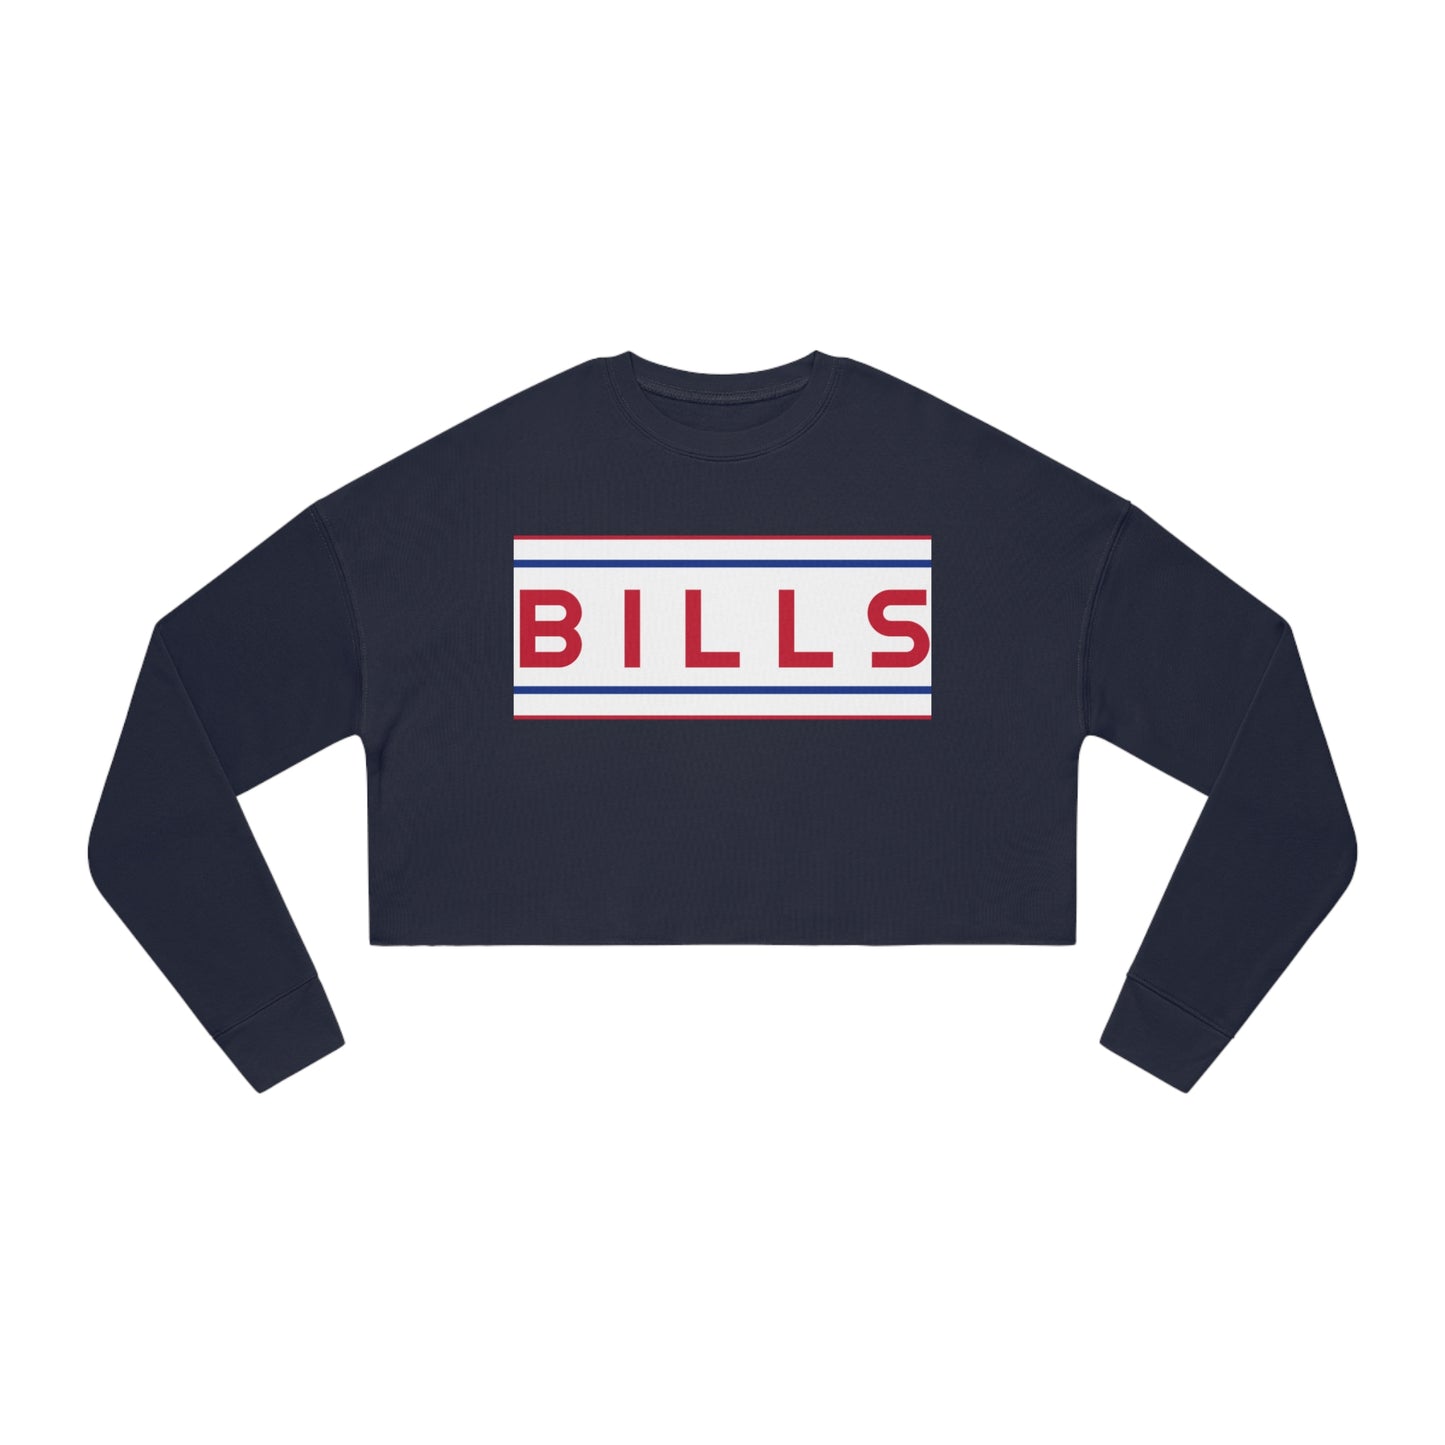 Bills Women's Cropped Sweatshirt